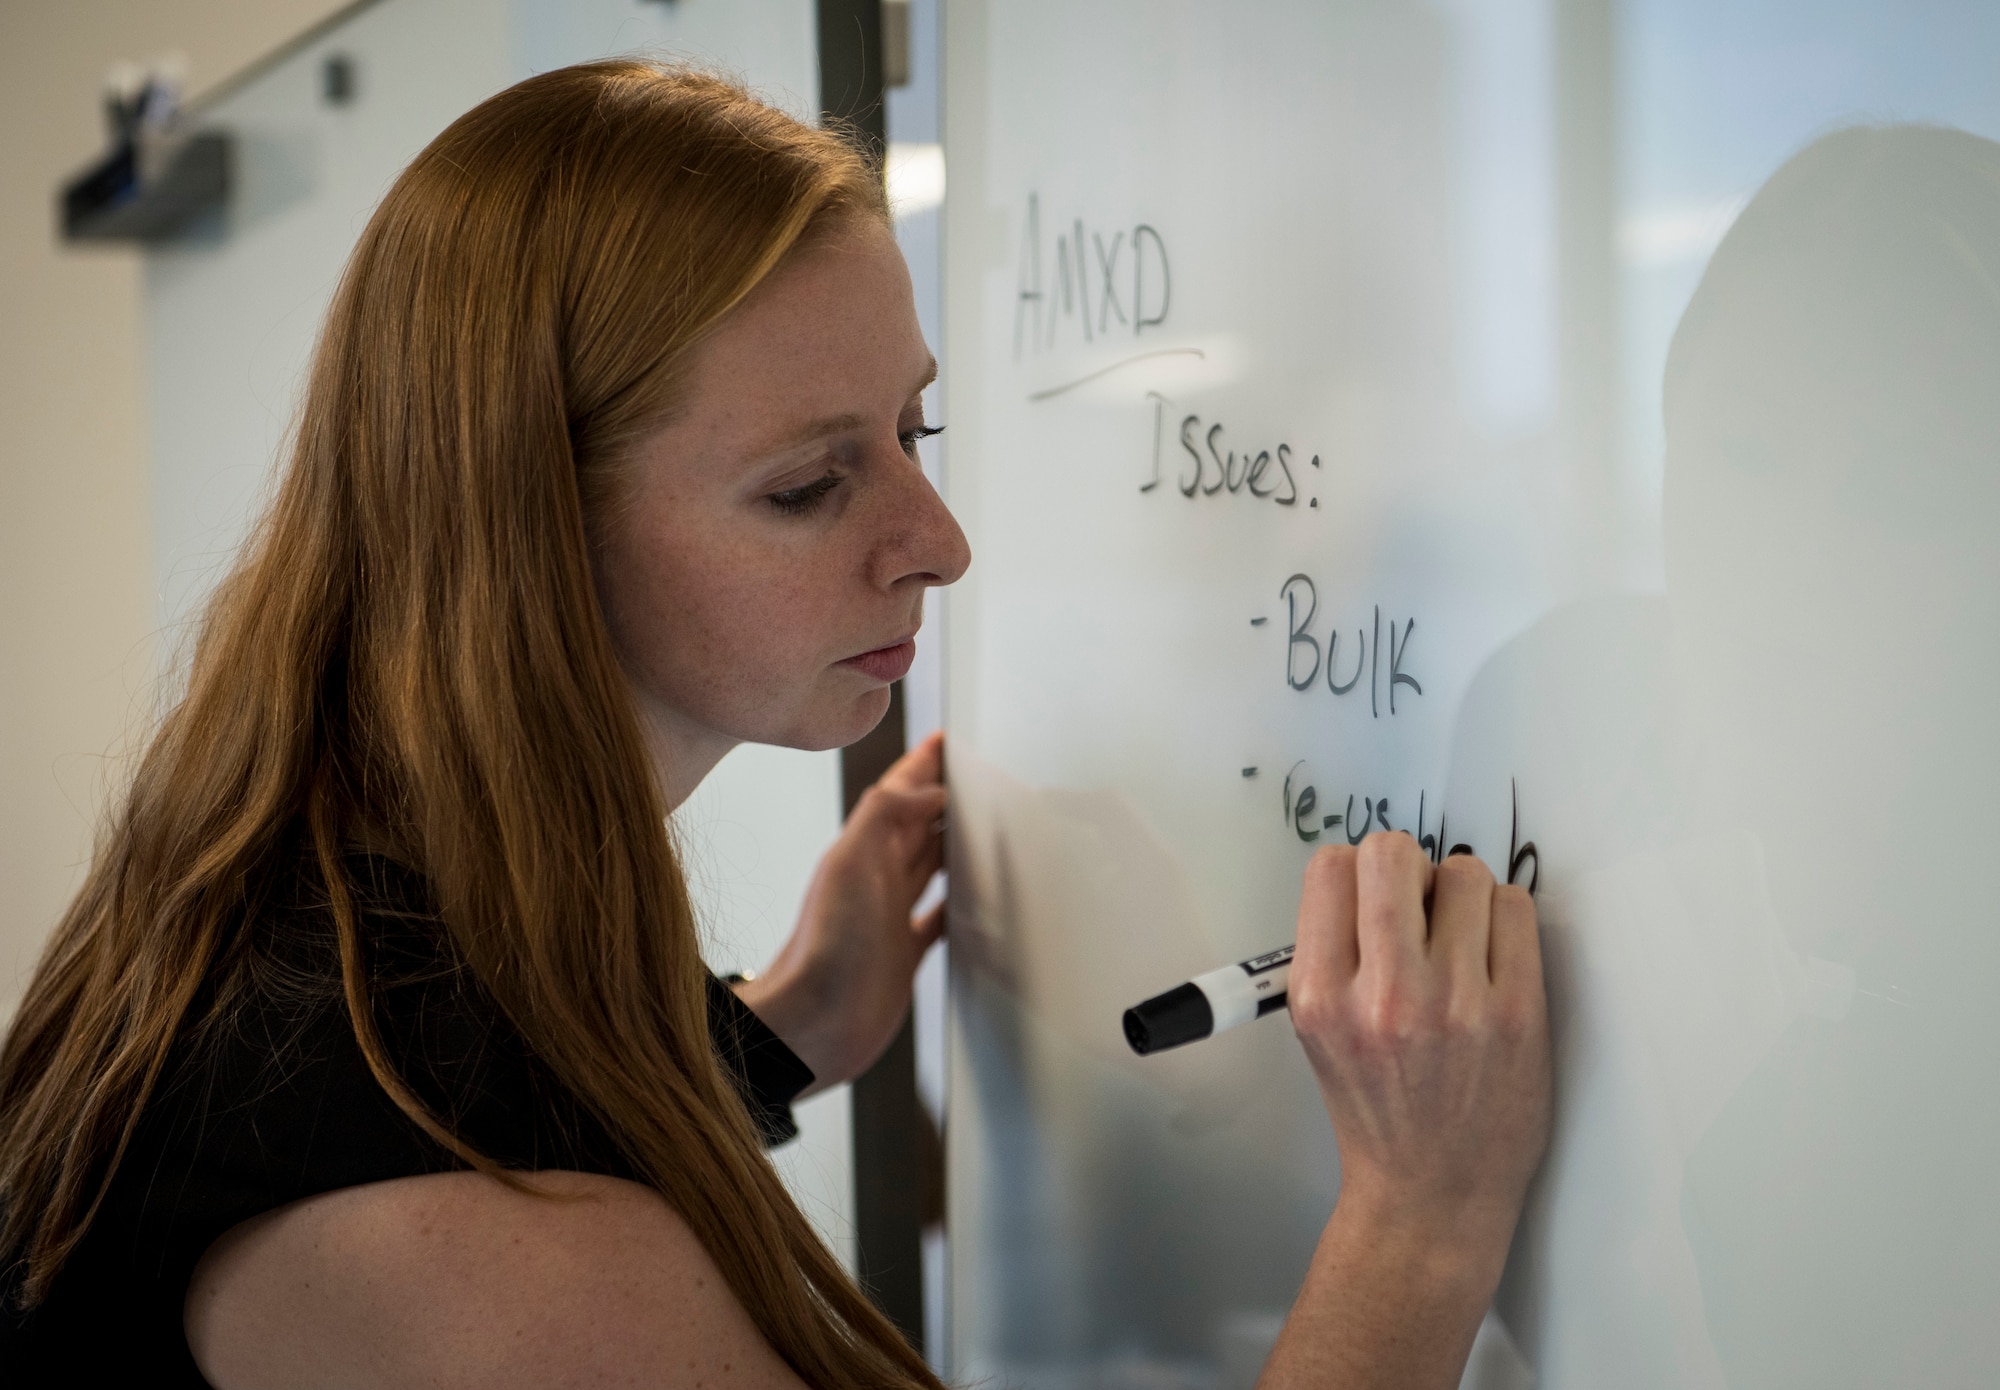 A woman writes on a dry erase board.